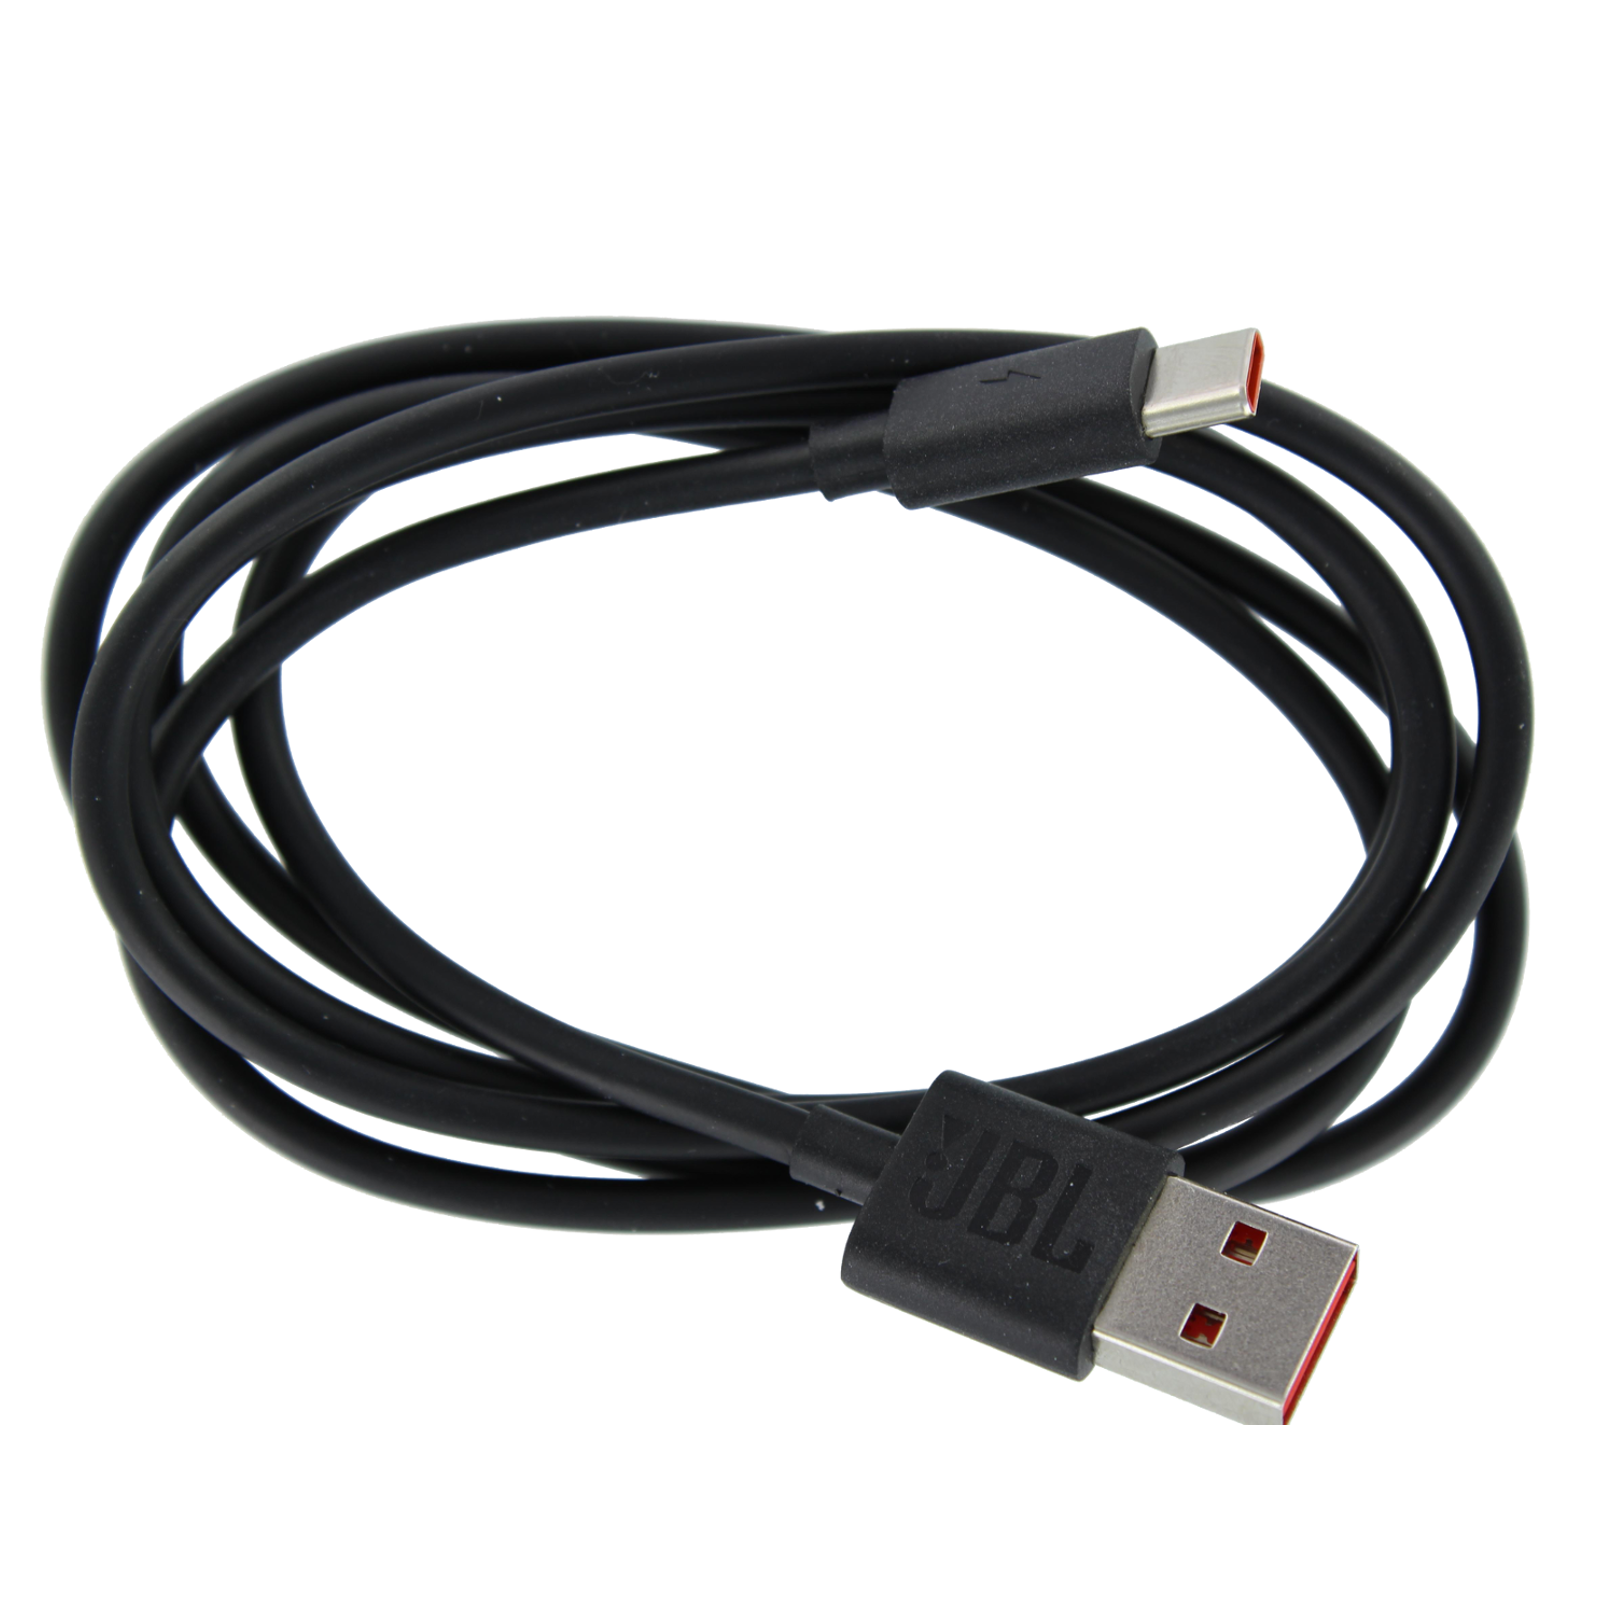 JBL USB cable for Quantum 800 - Black - USB cable 2.0A, 300cm - Hero